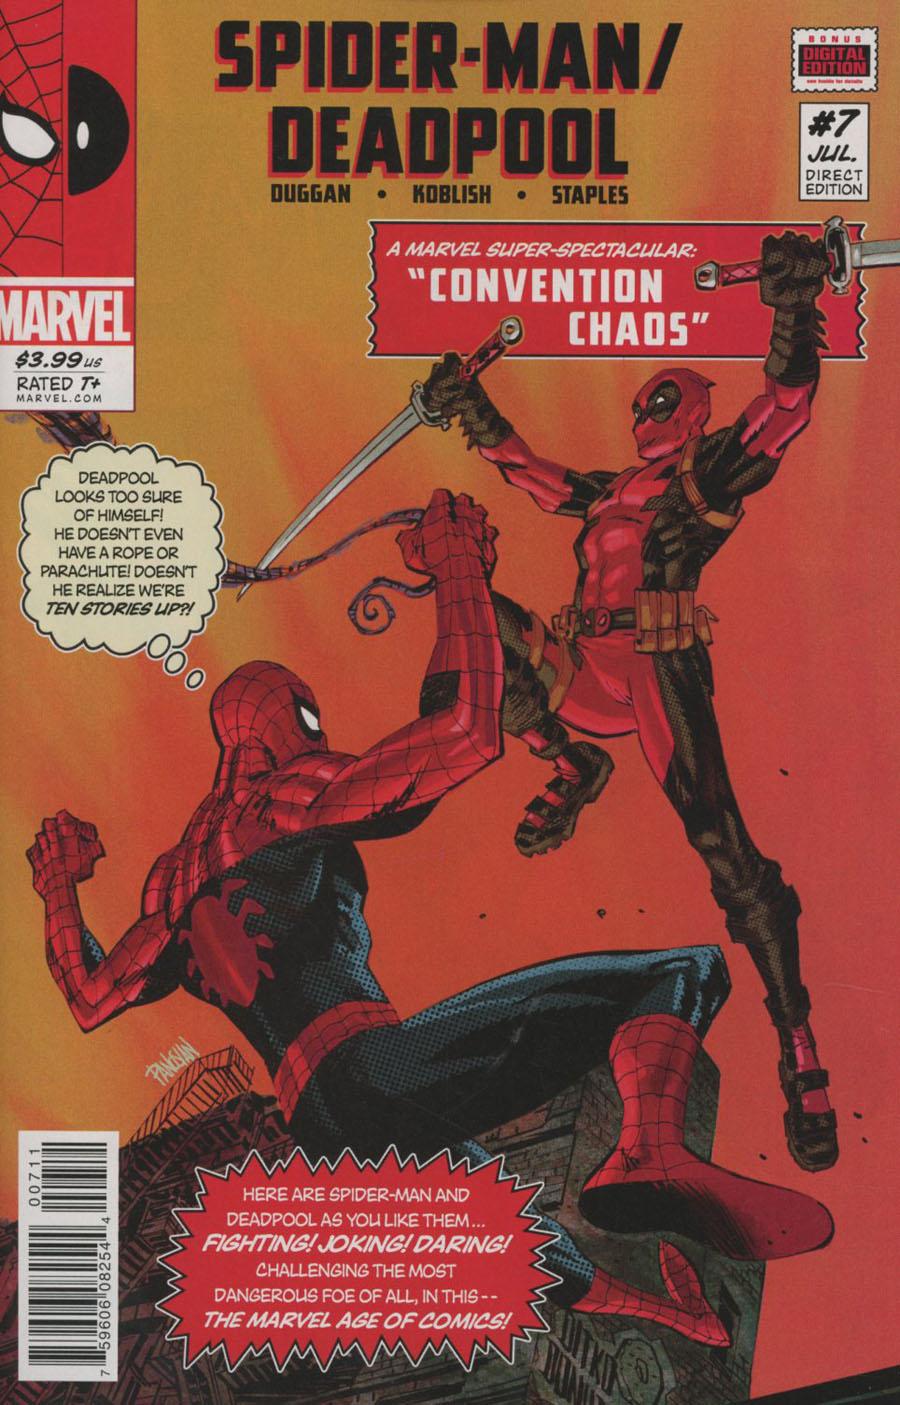 Spider-Man Deadpool Vol. 1 #7